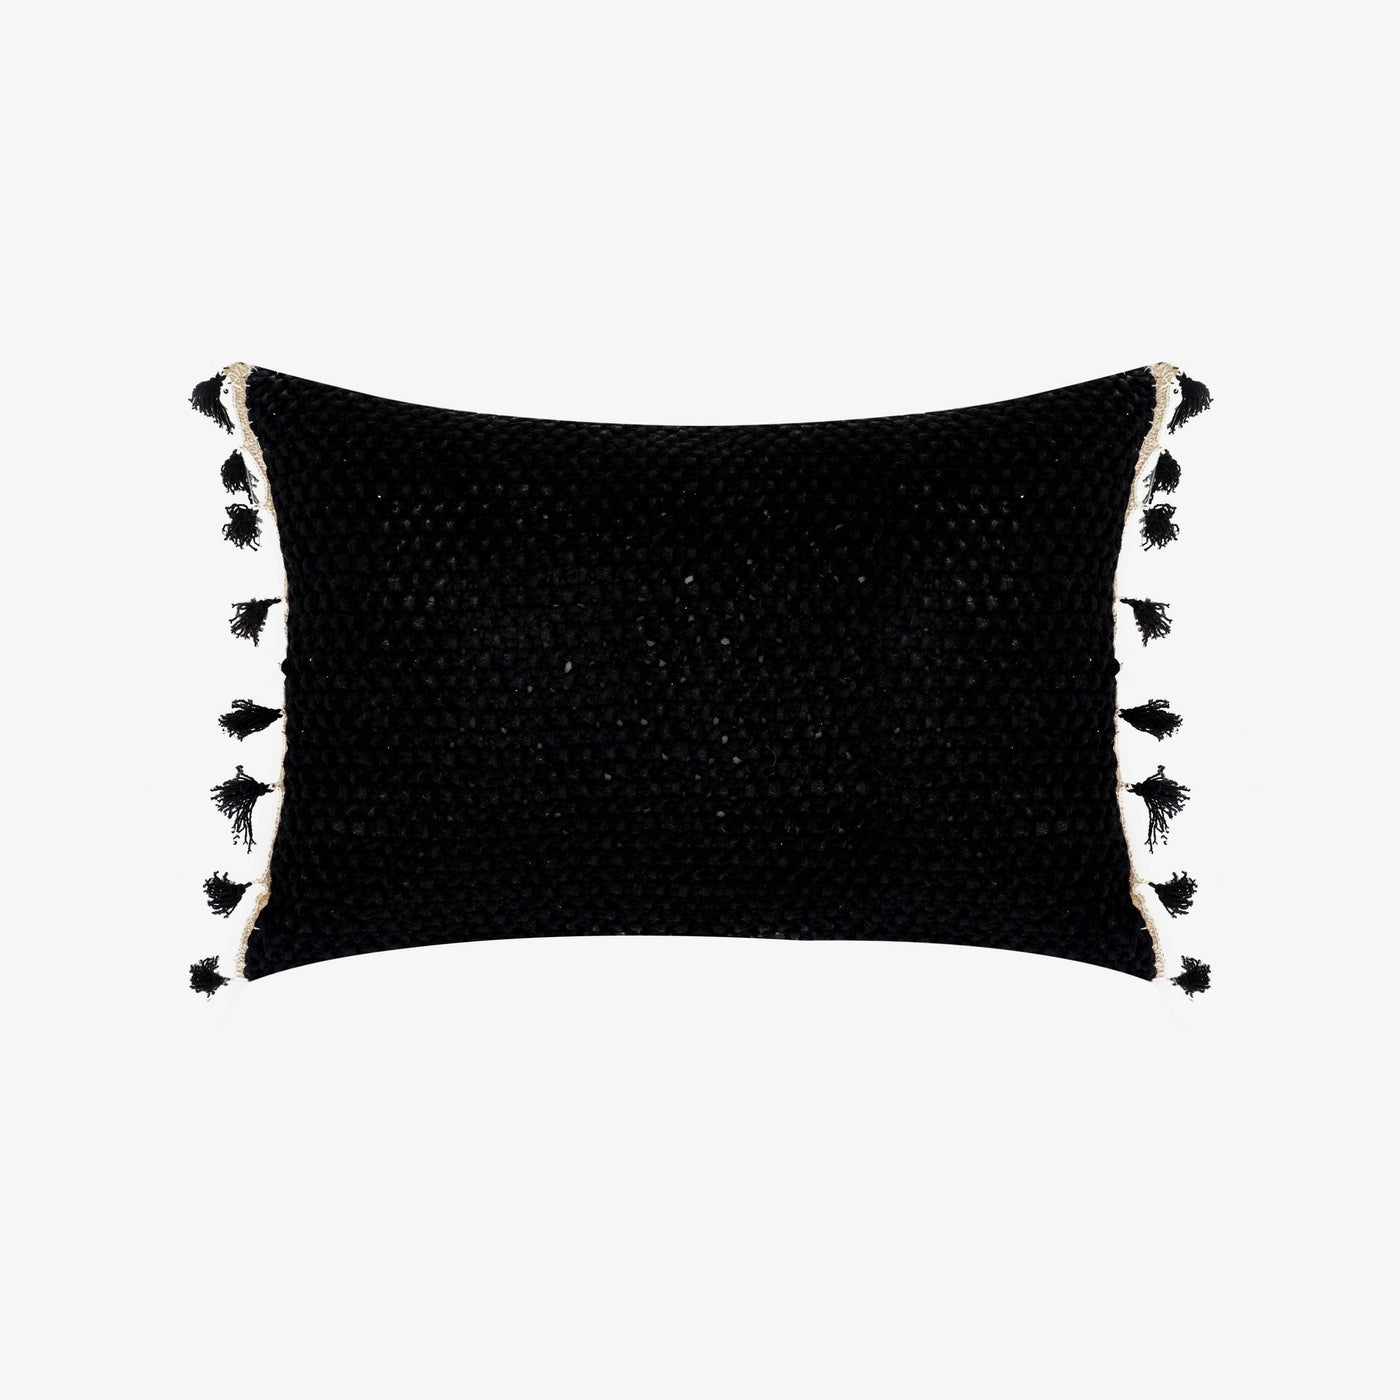 Hurley Cushion Cover, Black, 45x60 cm 1